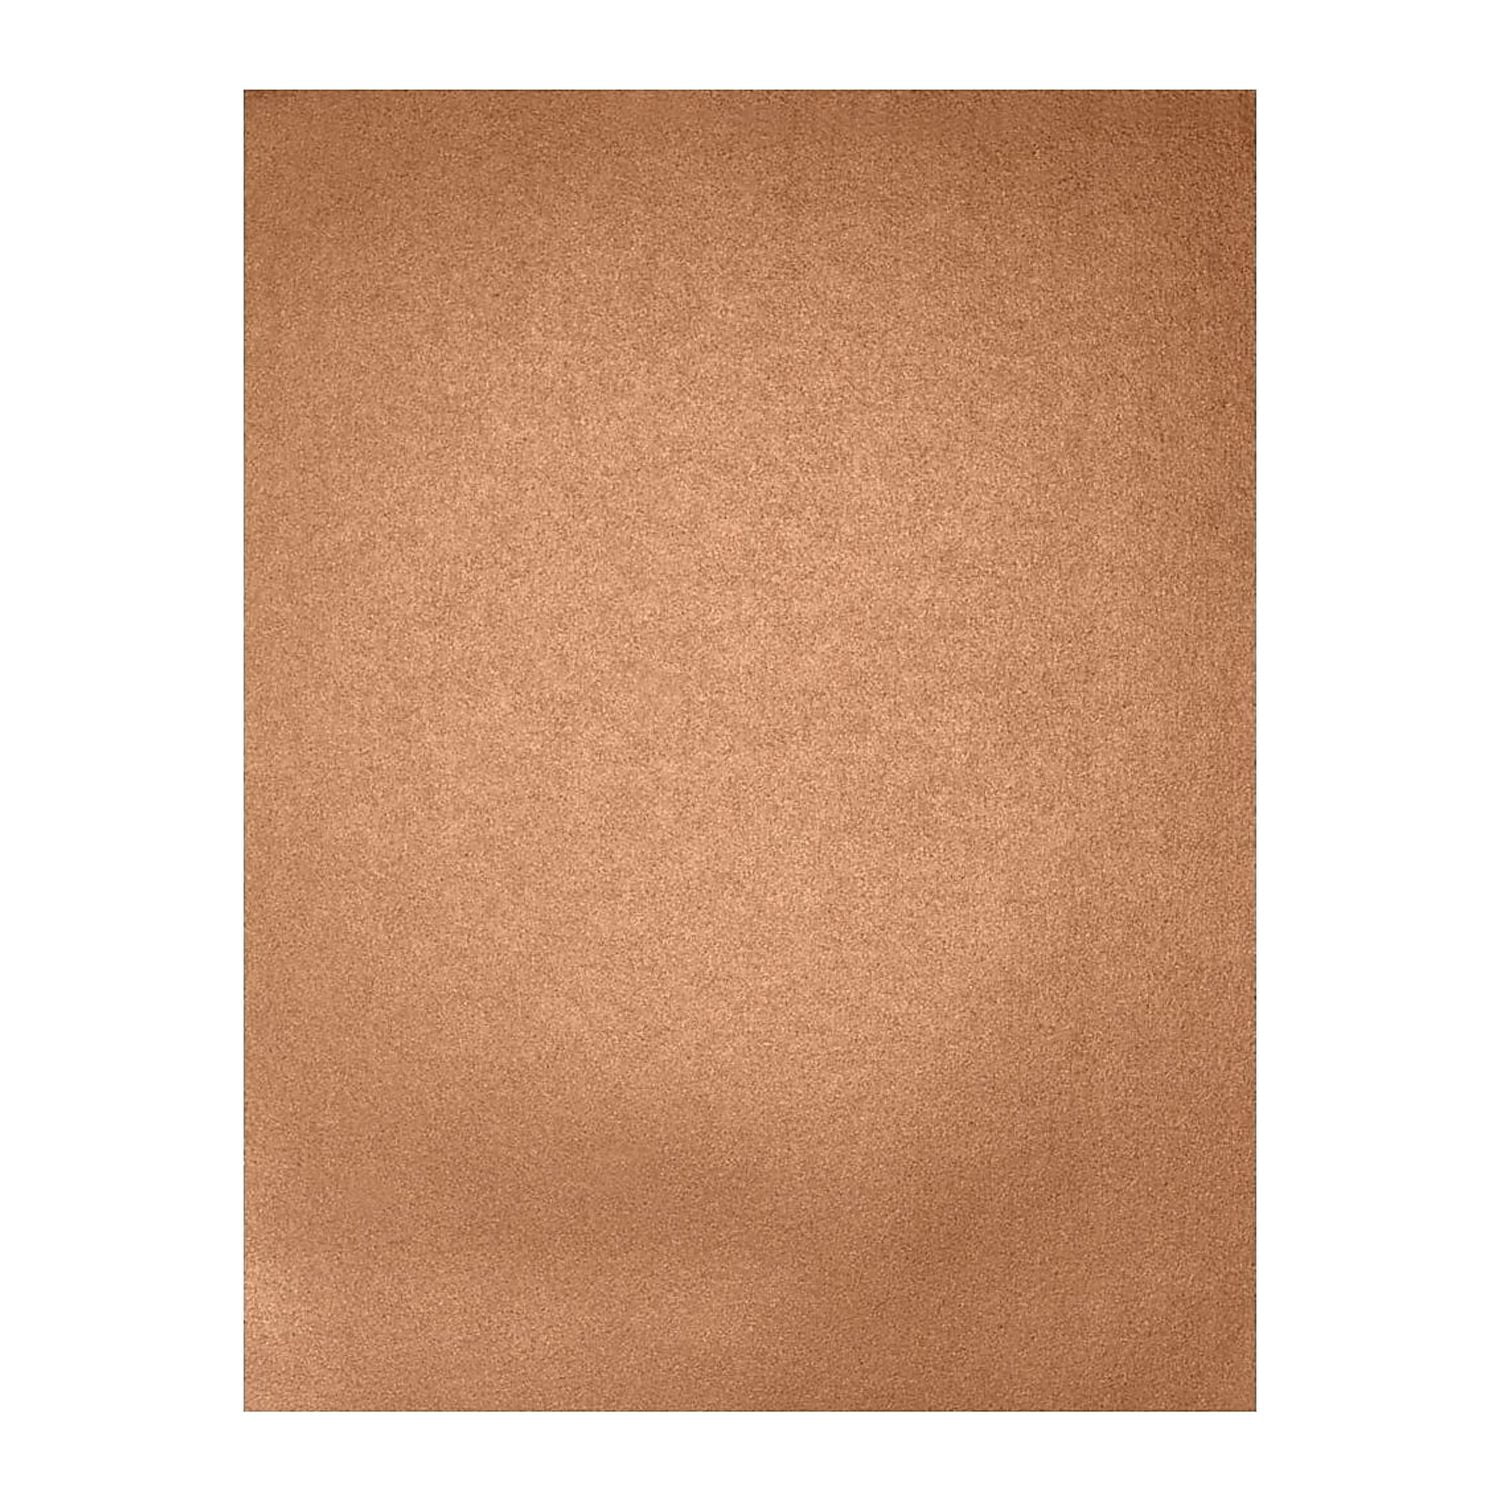 Foil Cardstock Textured Copper 12 x 12 Sheets Bulk Pack of 25